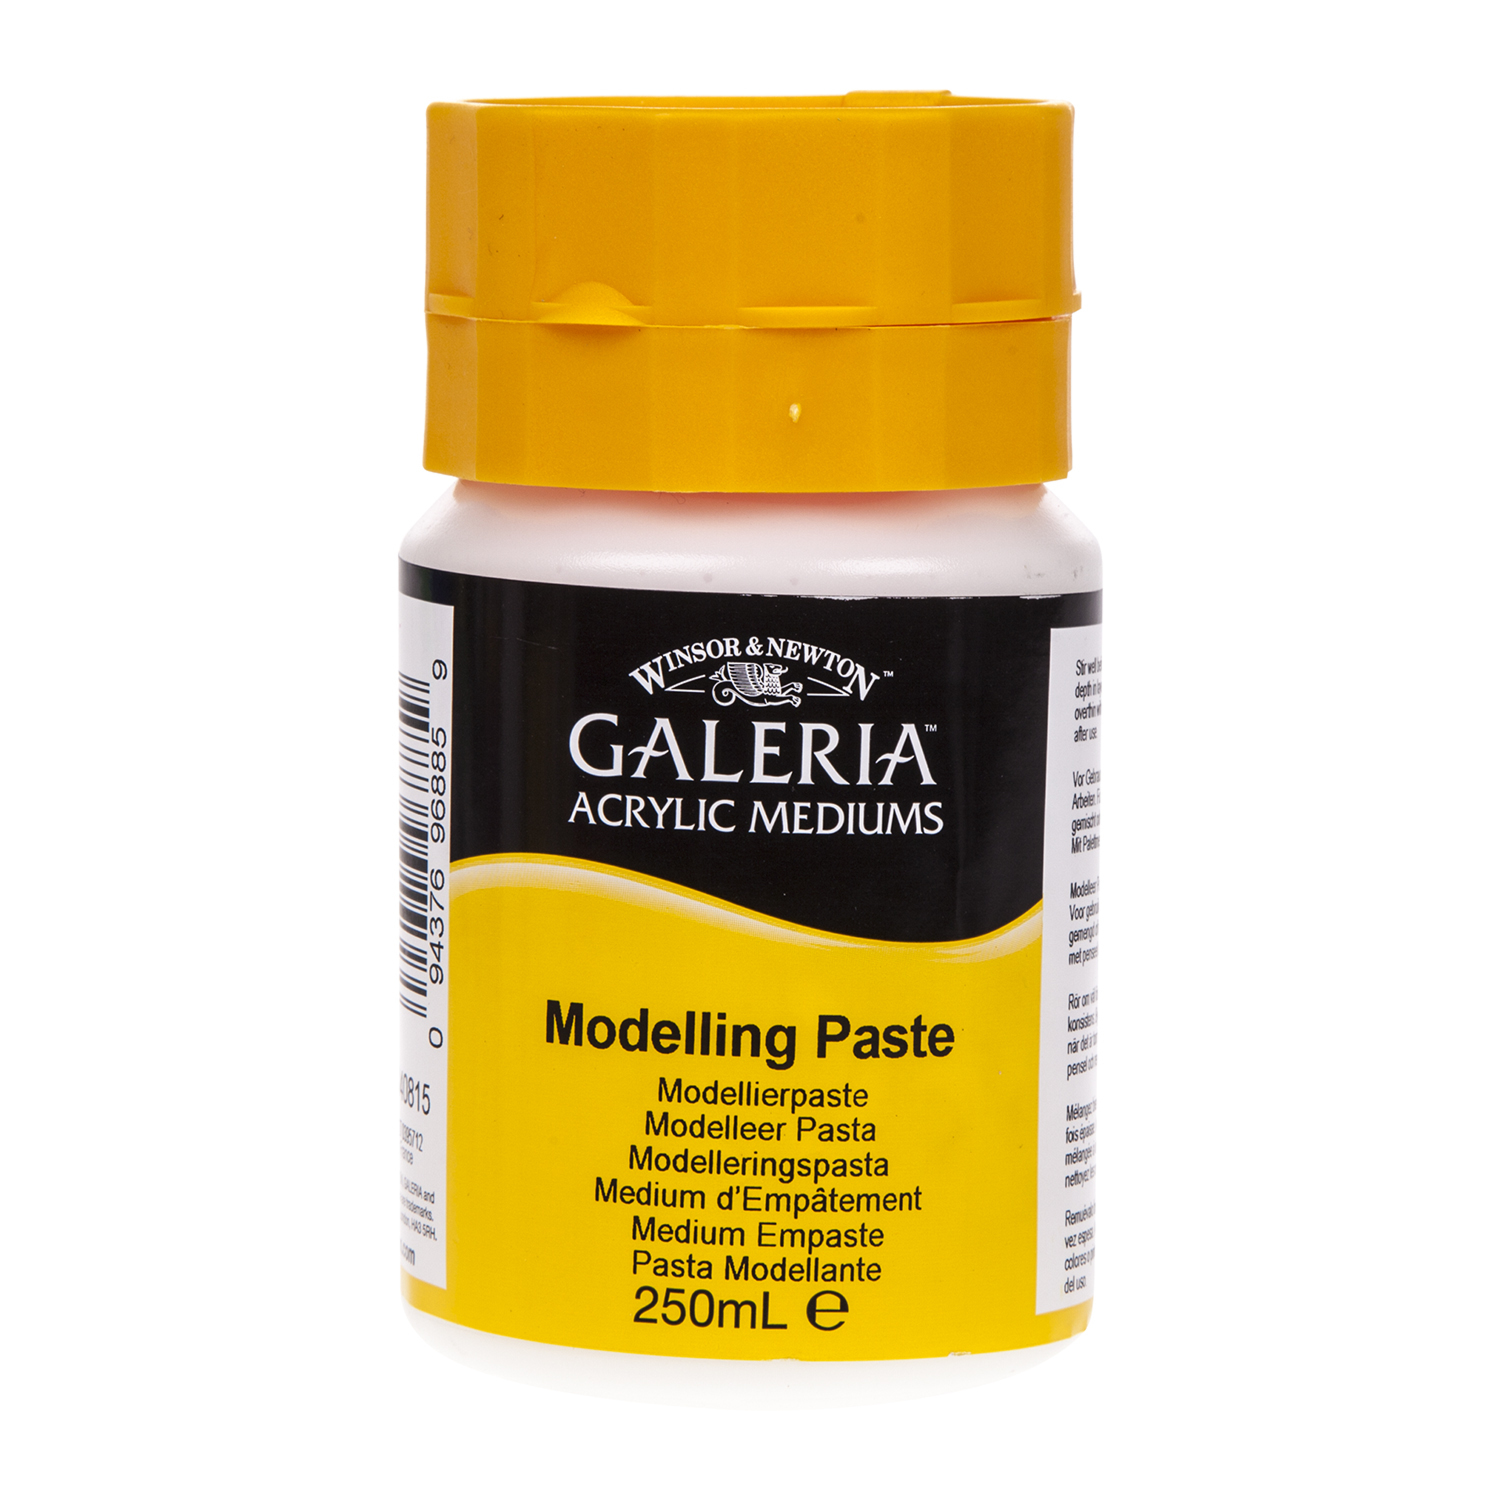 Galeria Flexible 250ml Modelling Paste Image